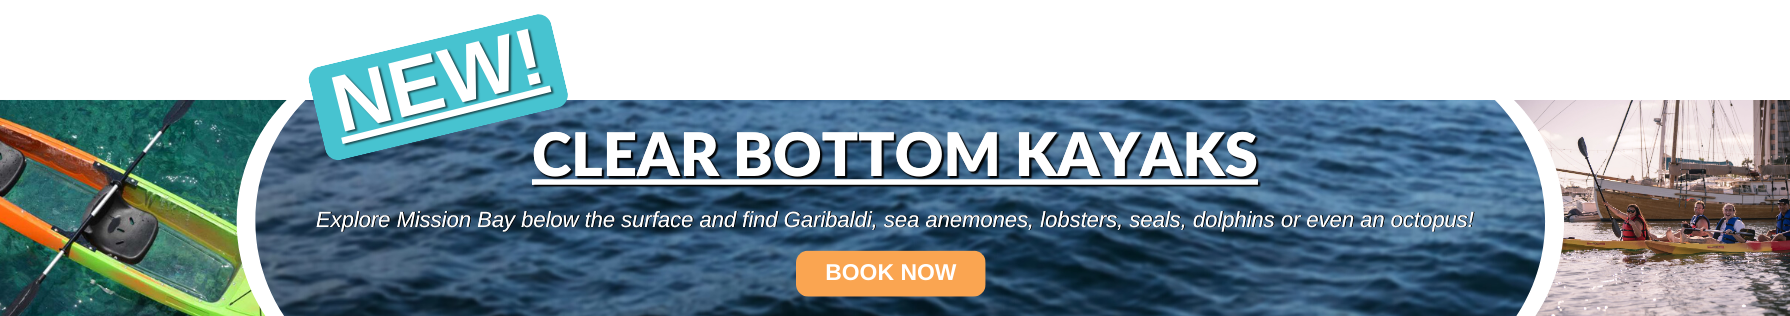 Clear Bottom Kayaks